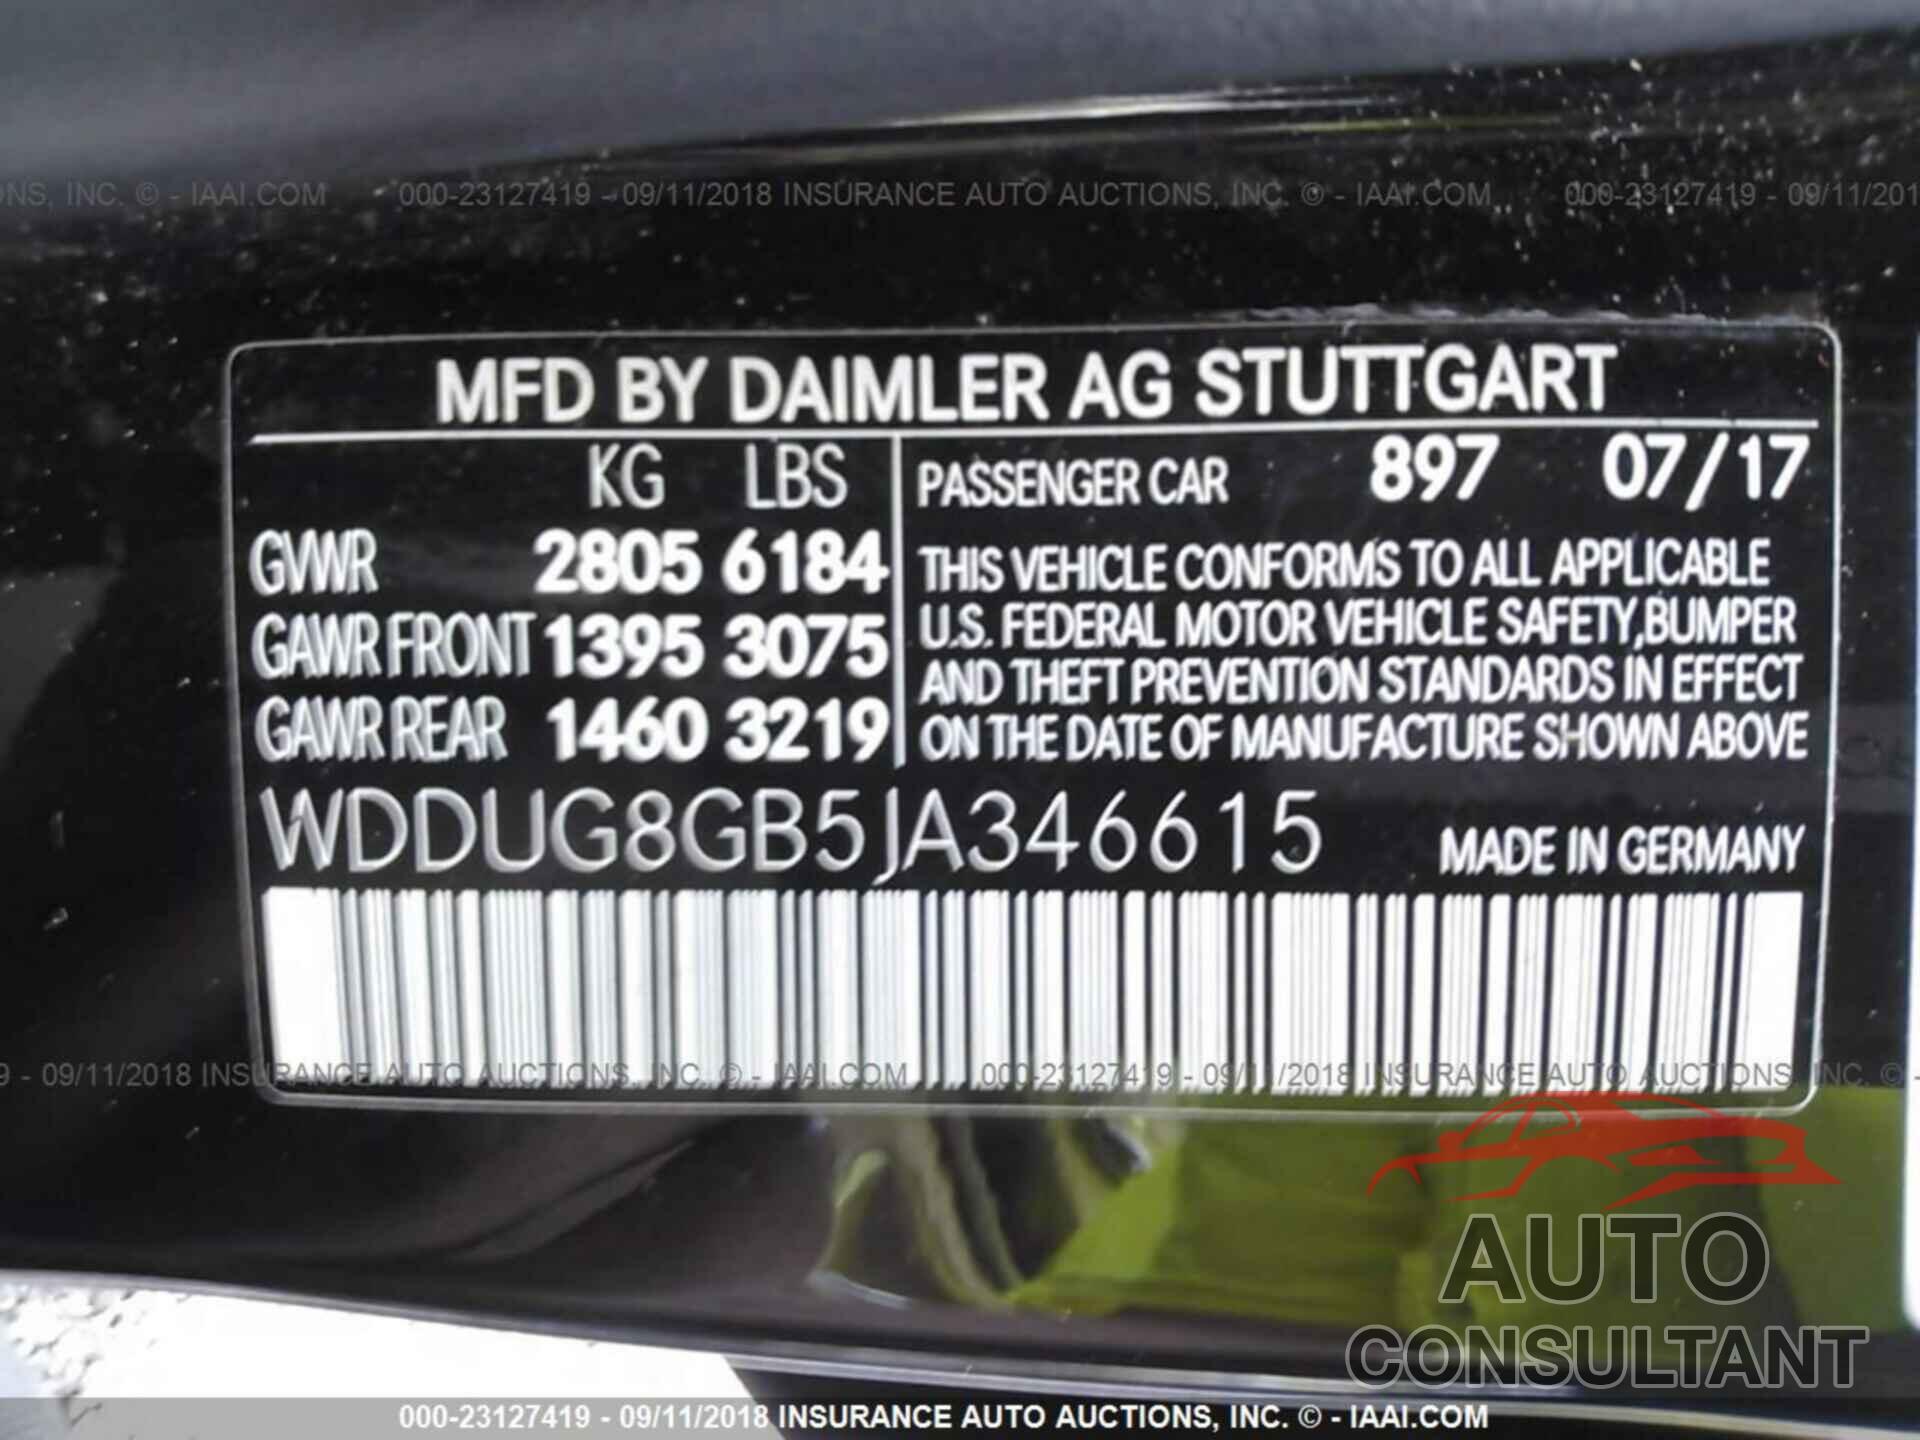 Mercedes-benz S 2018 - WDDUG8GB5JA346615